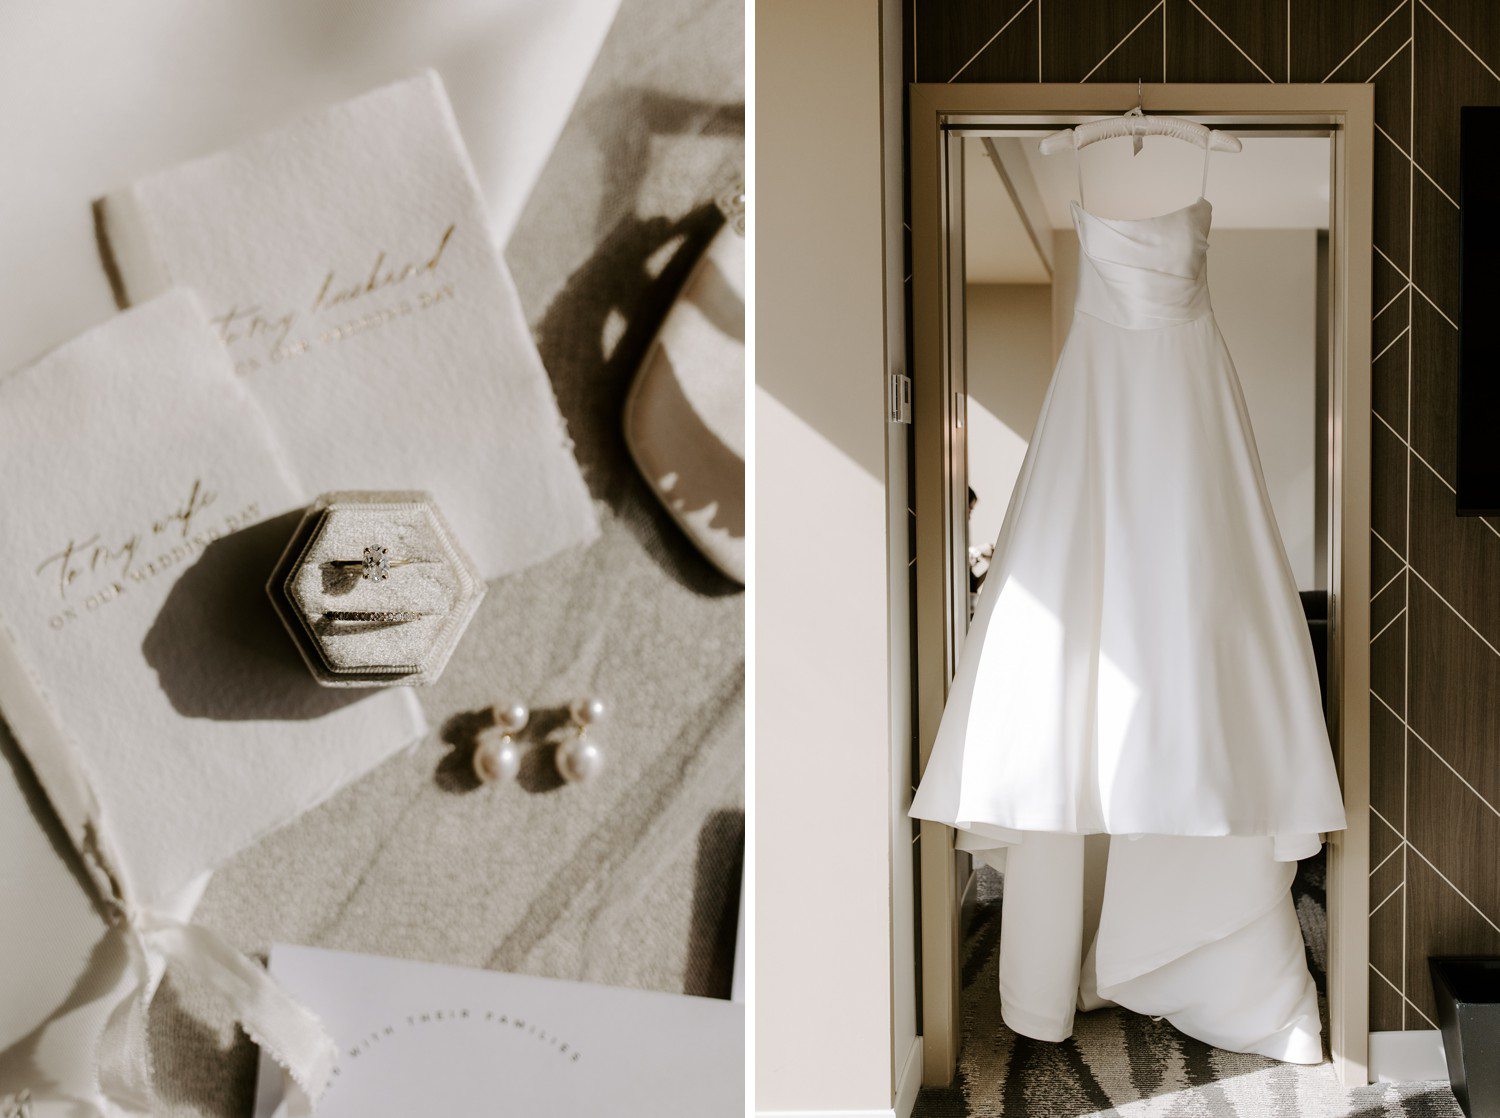 Weddings rings and wedding dress details.